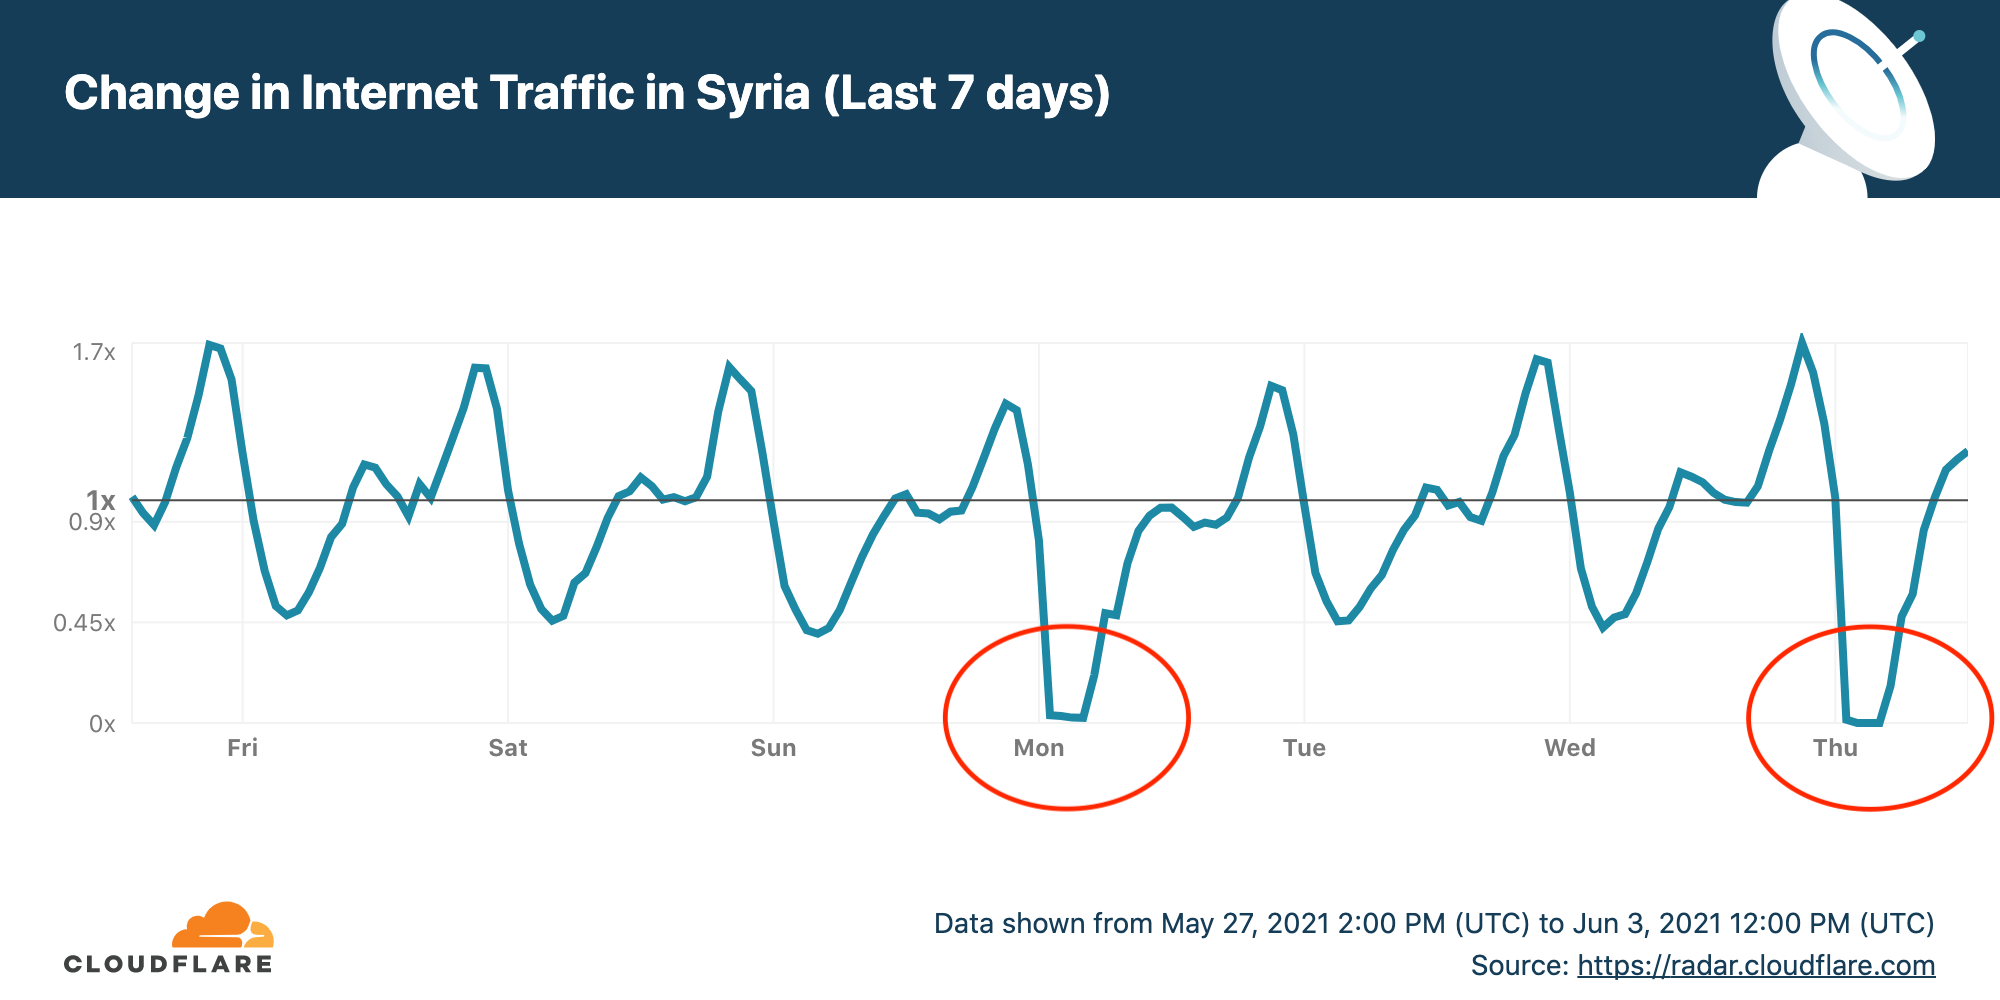 Syria’s exam-related Internet shutdowns